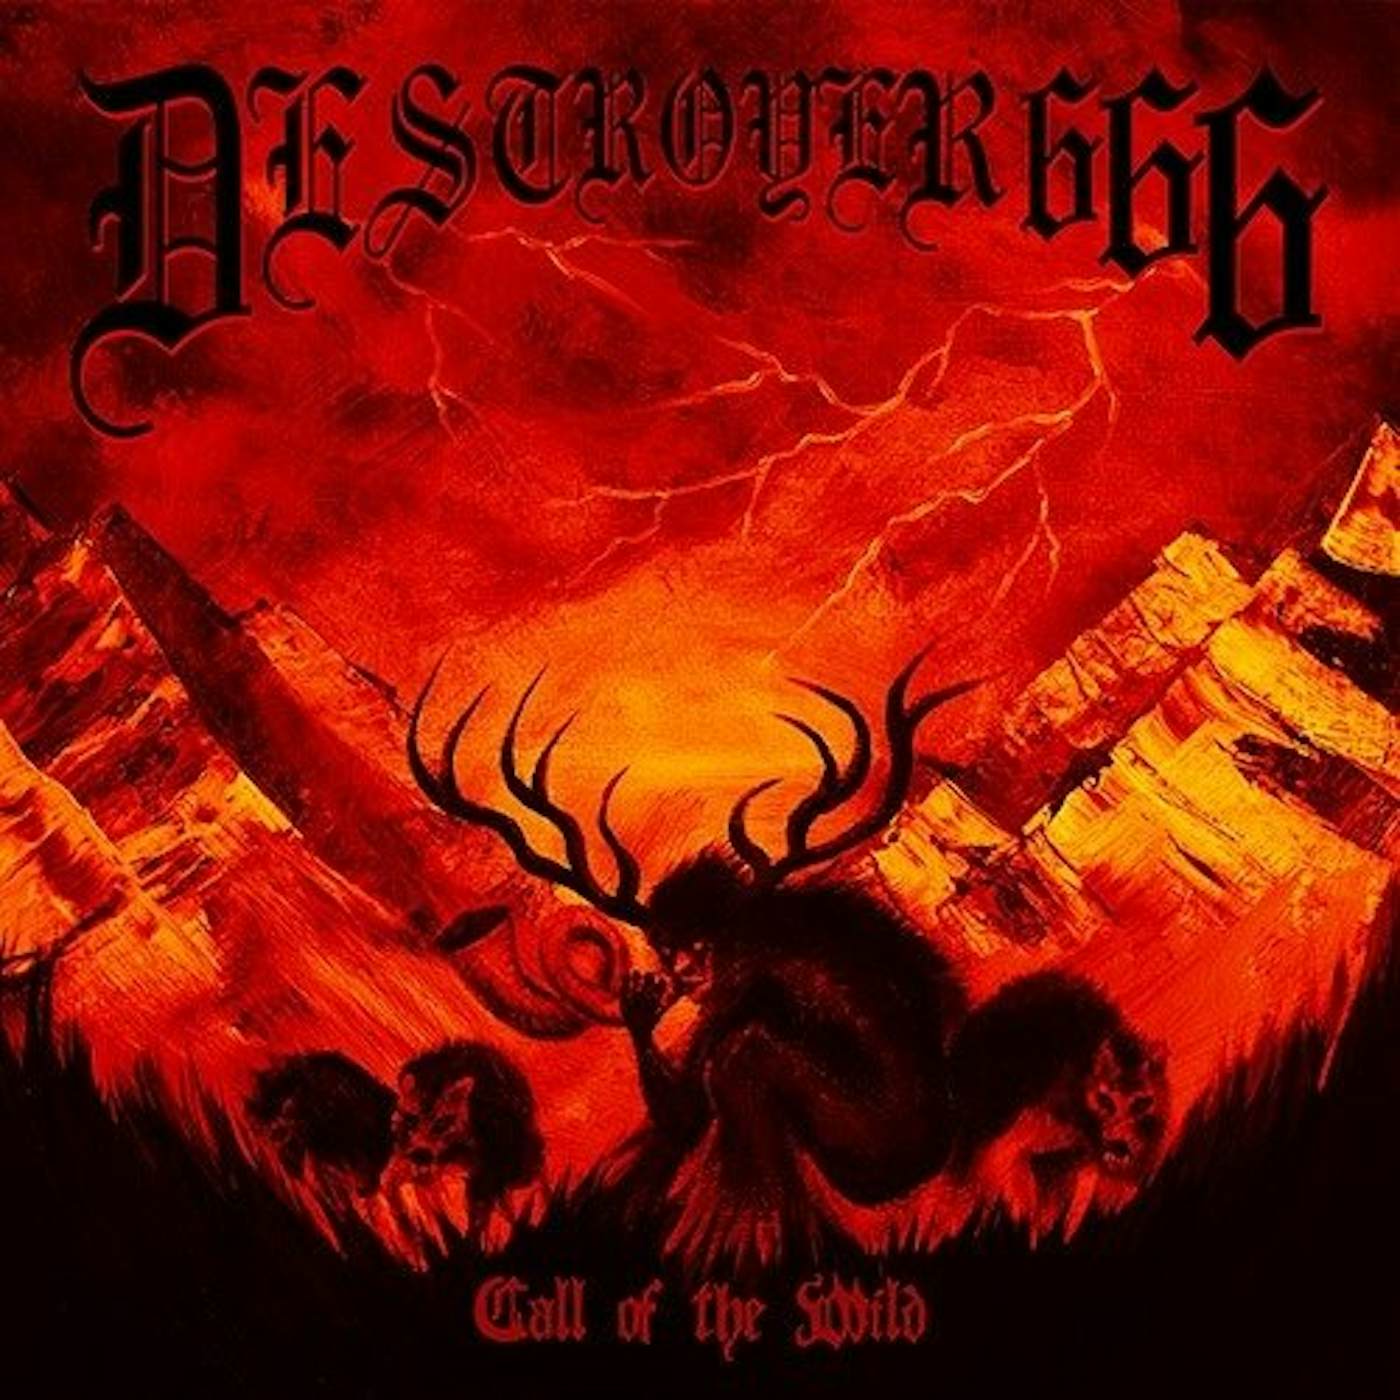 Deströyer 666 Call of the Wild Vinyl Record